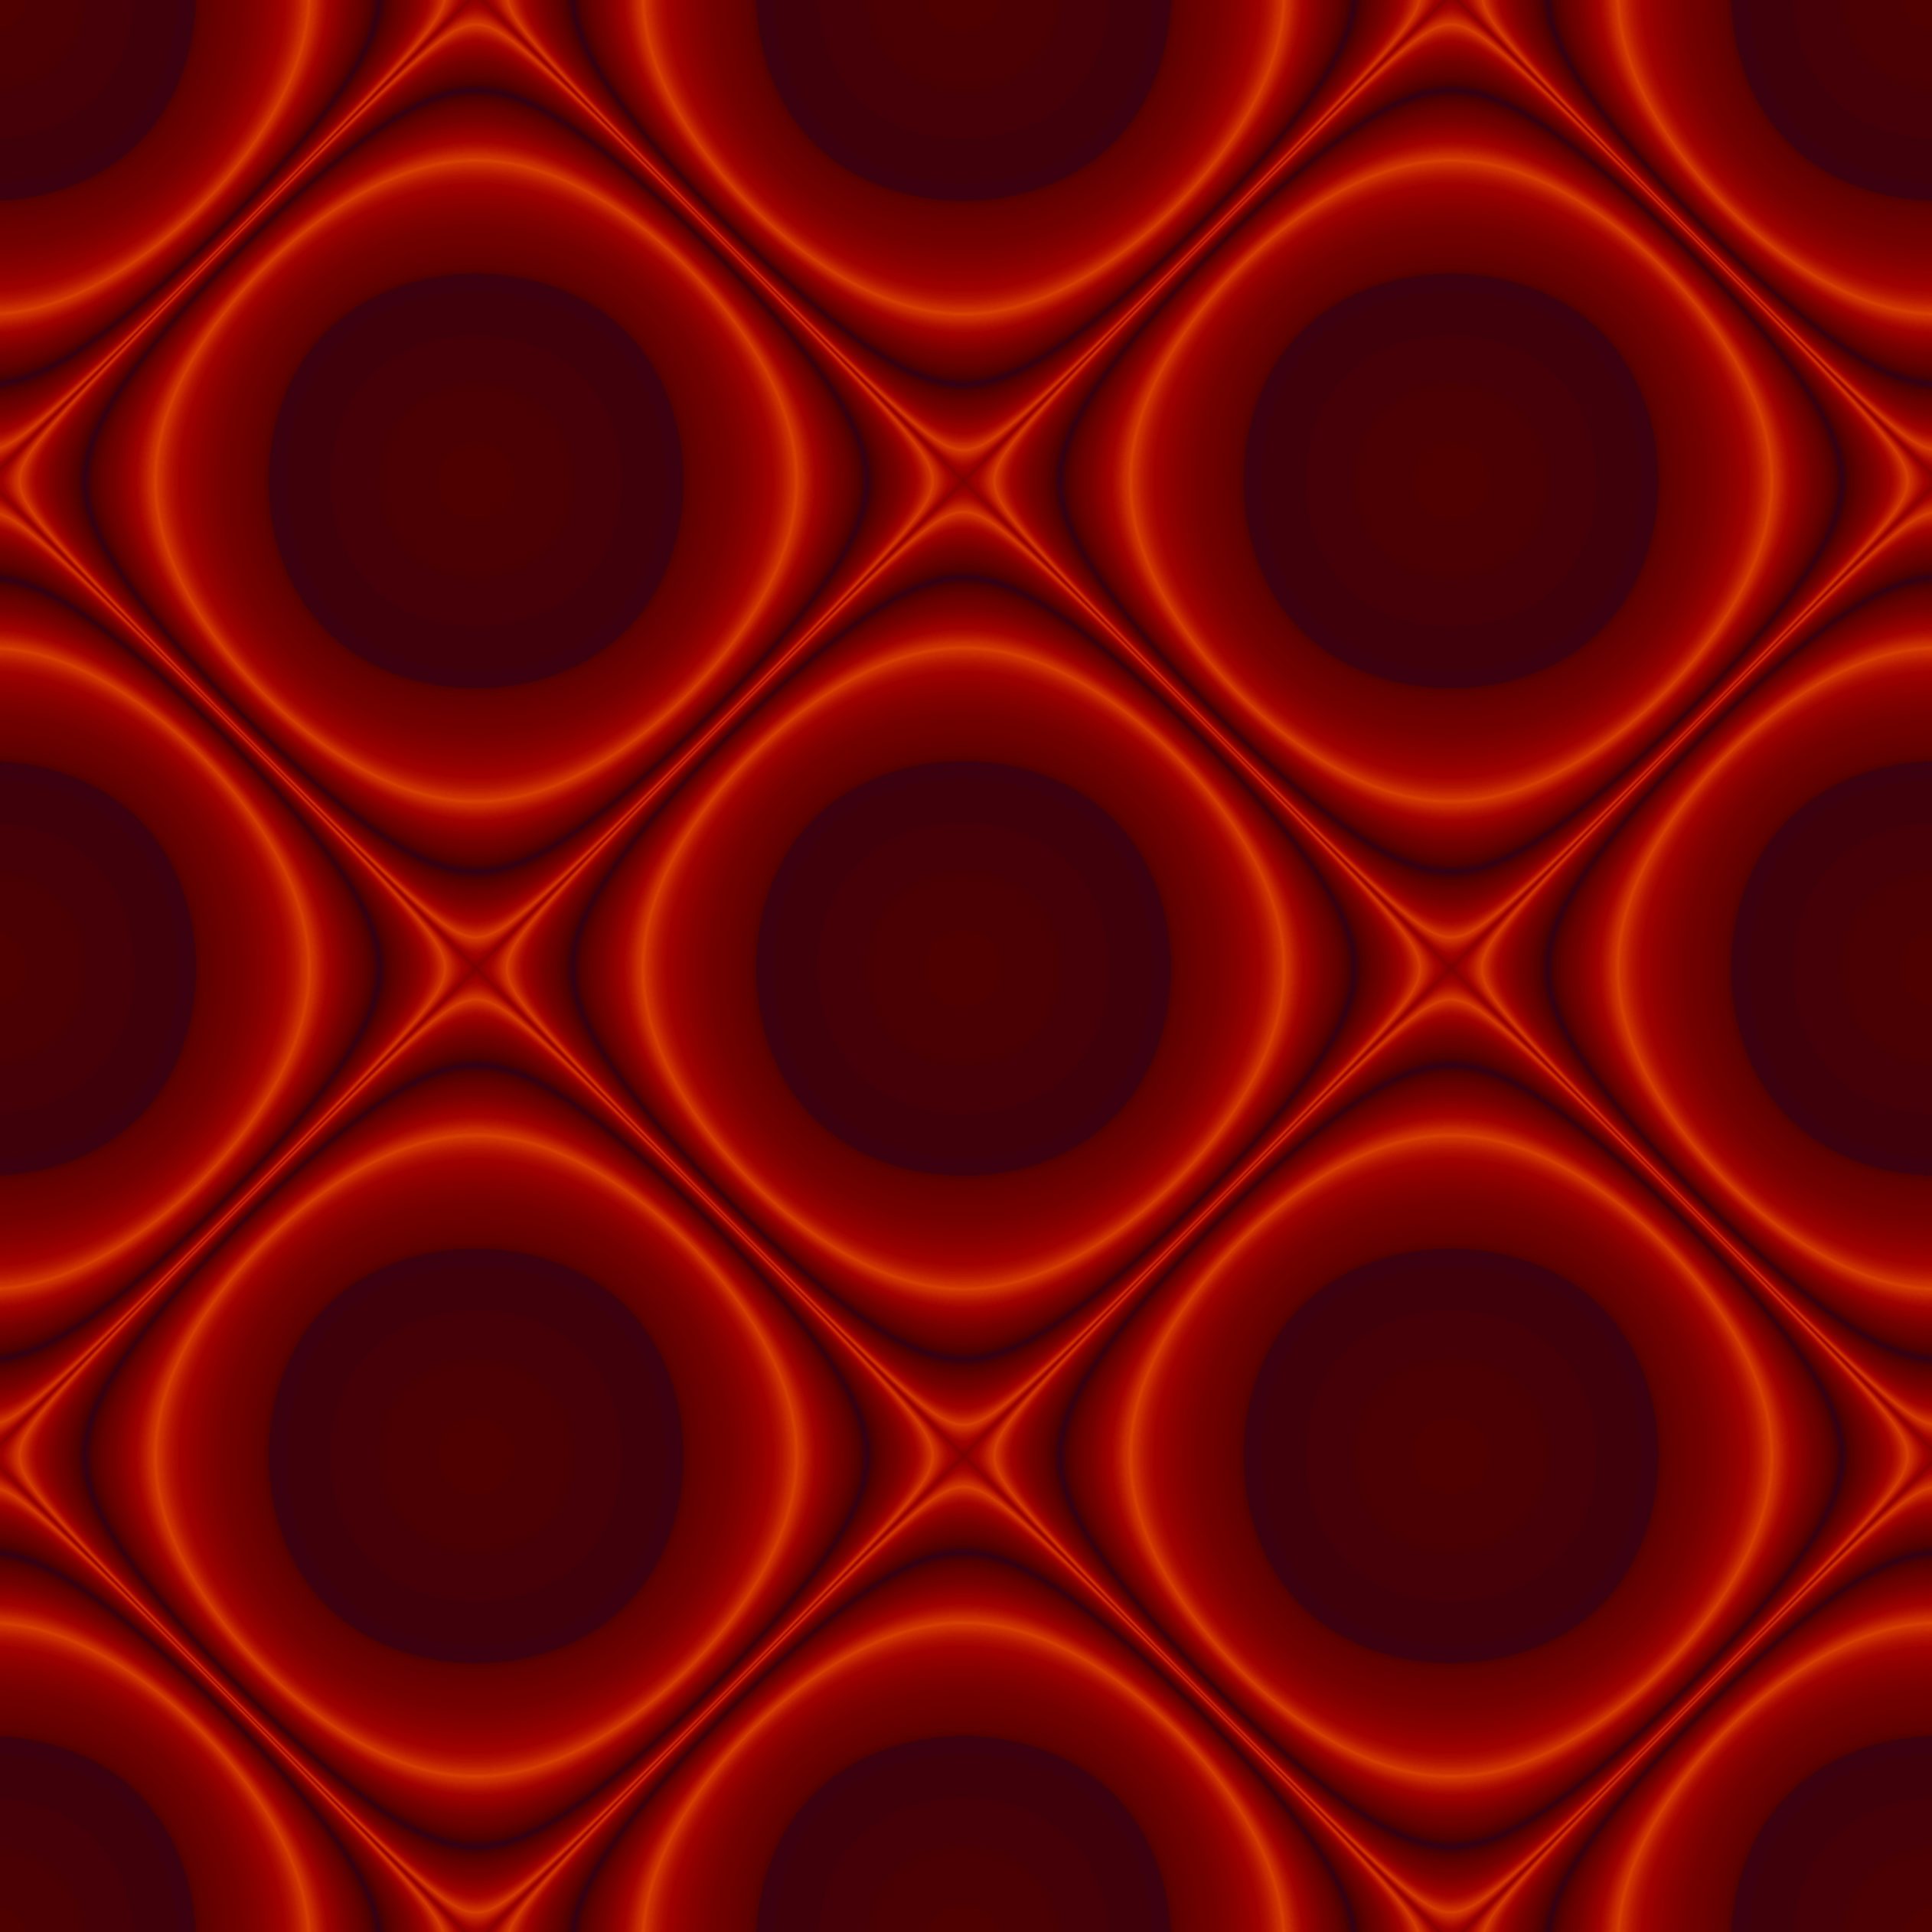 2524x2524 Parallax wallpaper 4k Abstract Pattern Design Red Ipad Wallpaper 2524x2524 pixels resolution